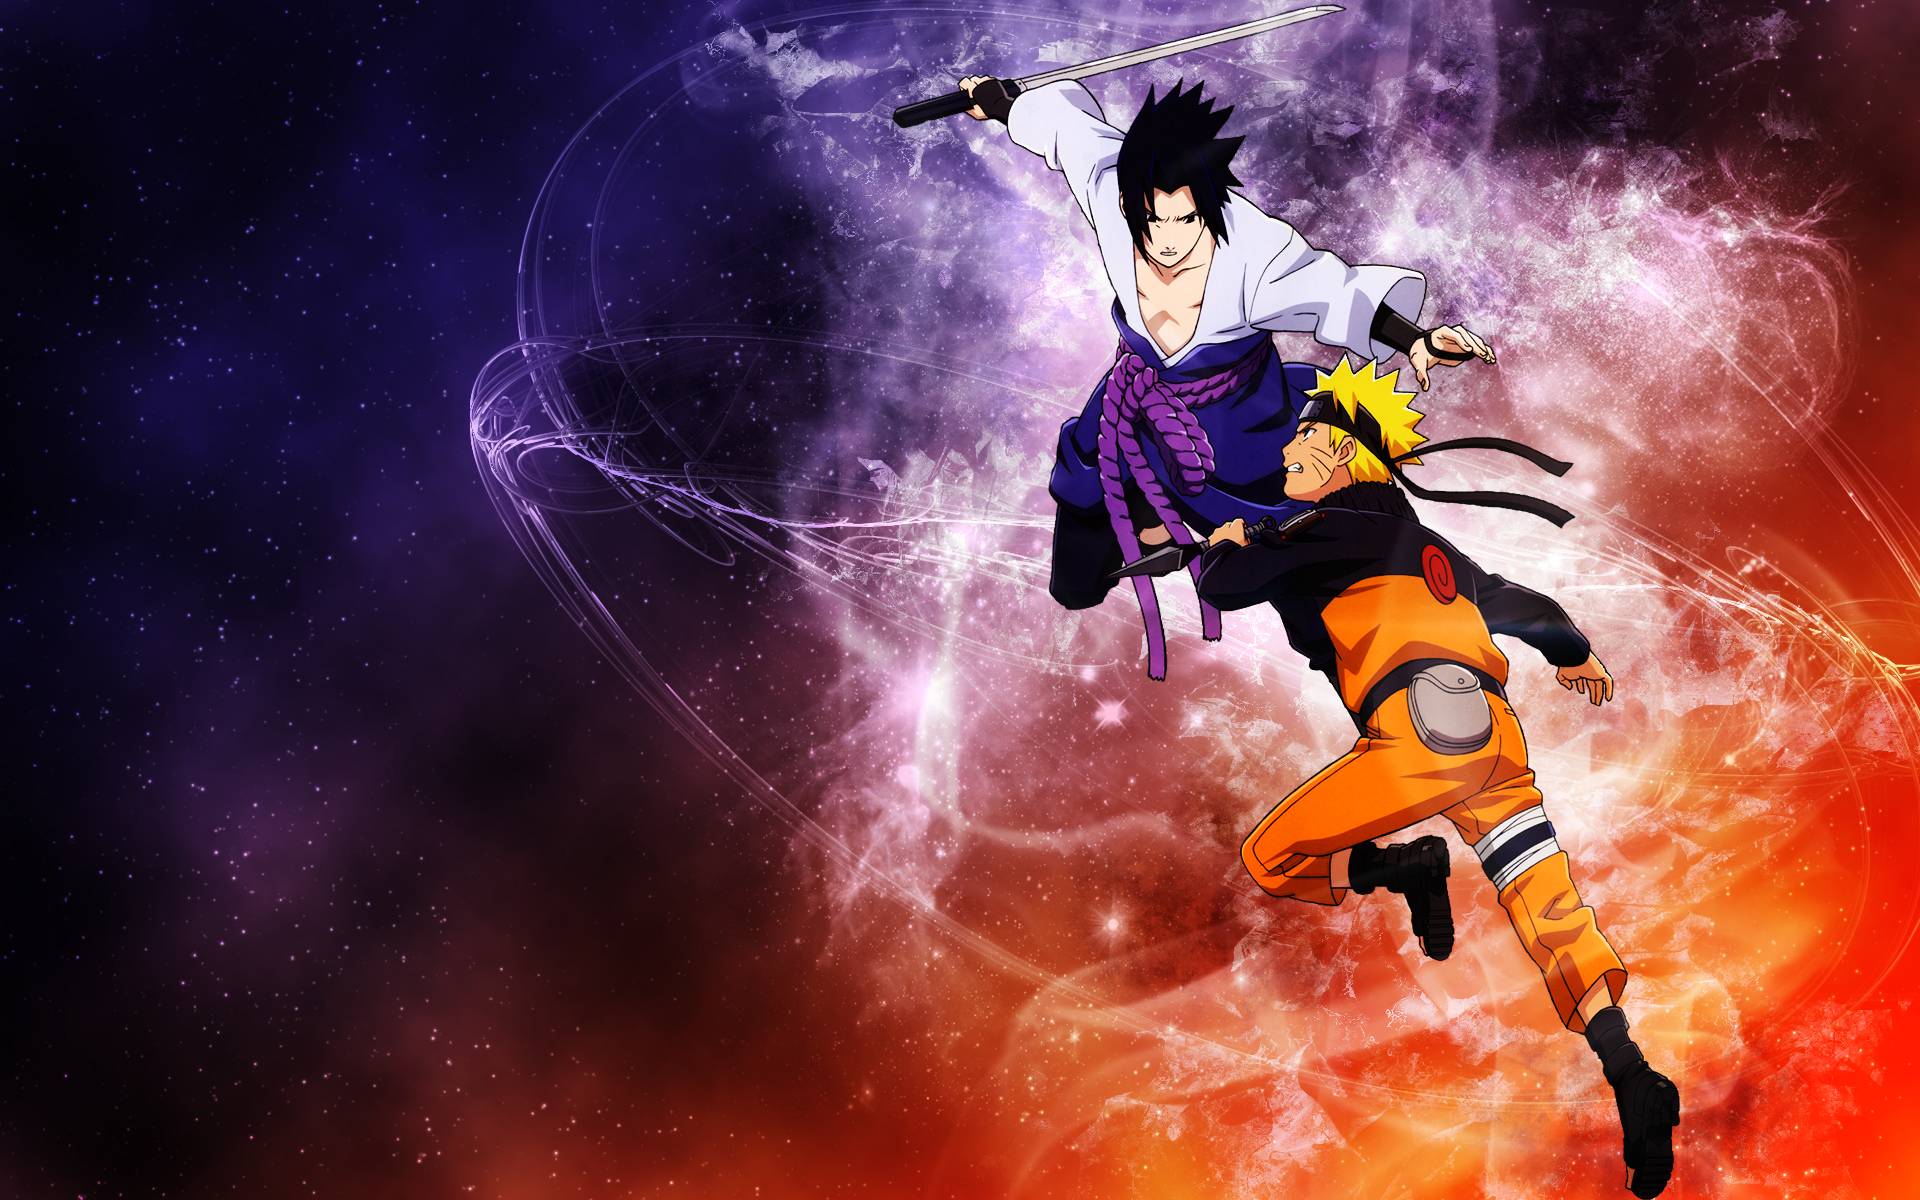 Naruto Wallpaper HD. Wallpaper, Background, Image, Art Photo